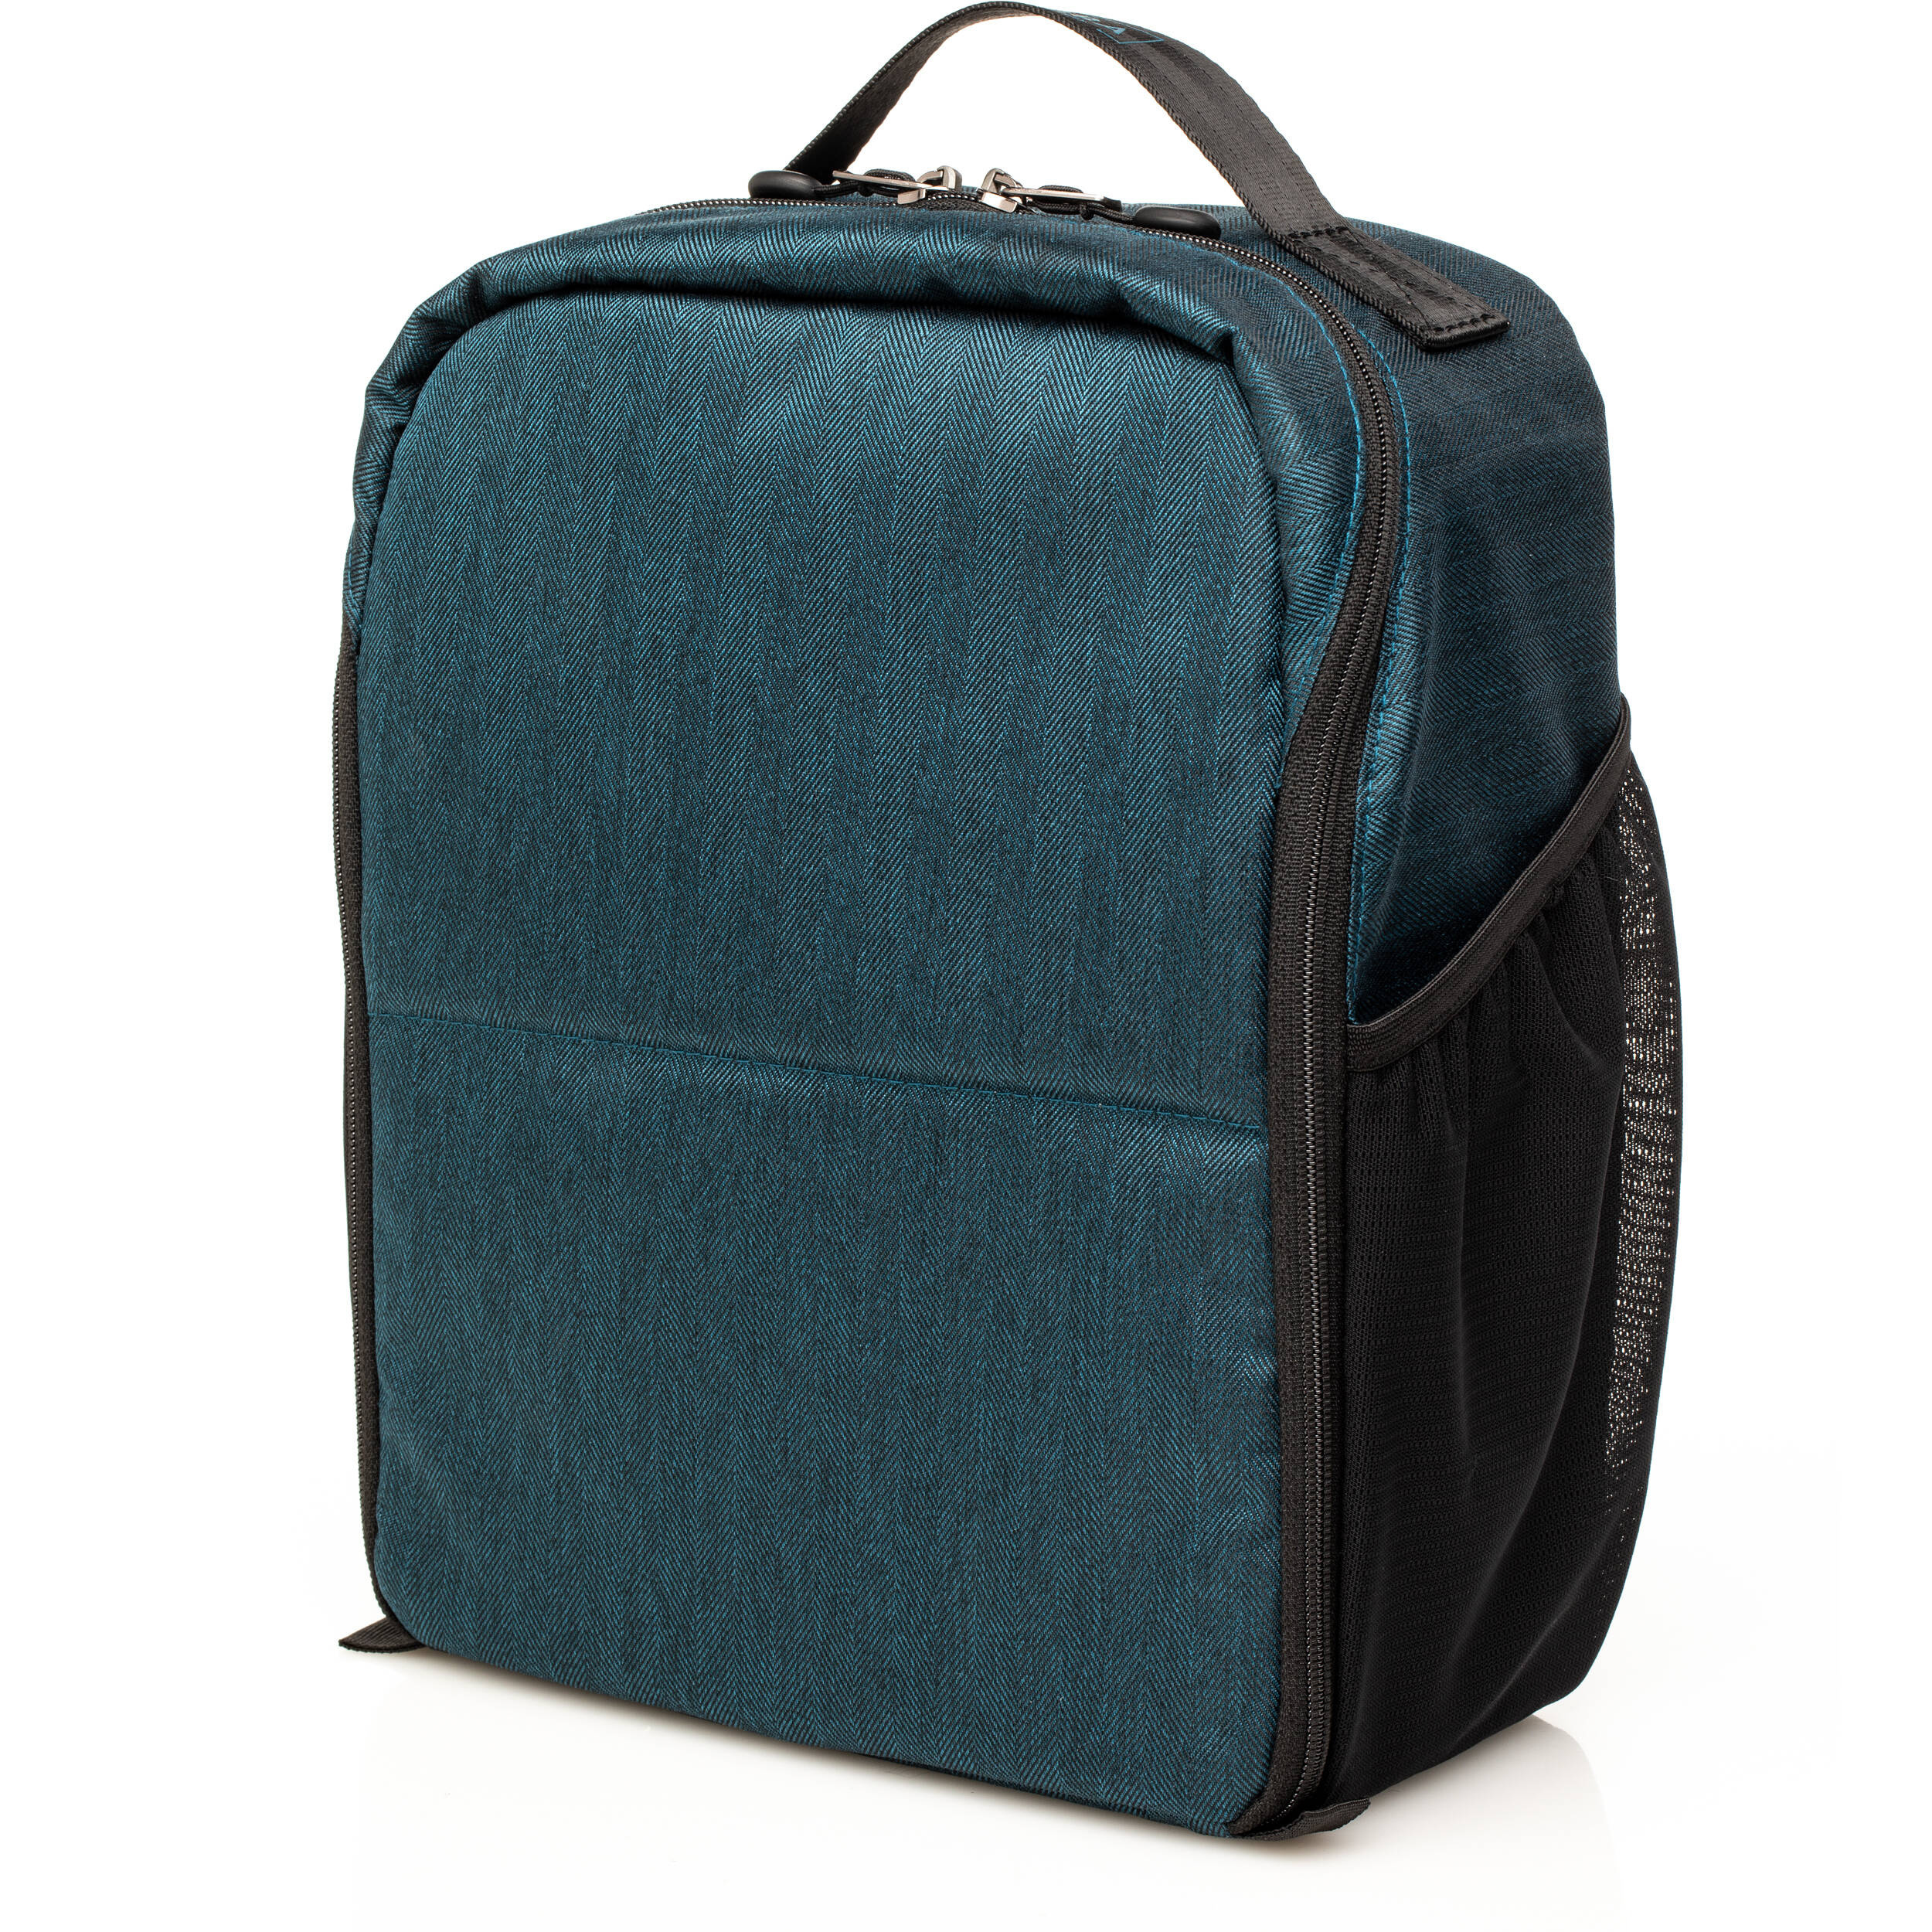 Tenba BYOB 10 DSLR Backpack Insert (Blue)